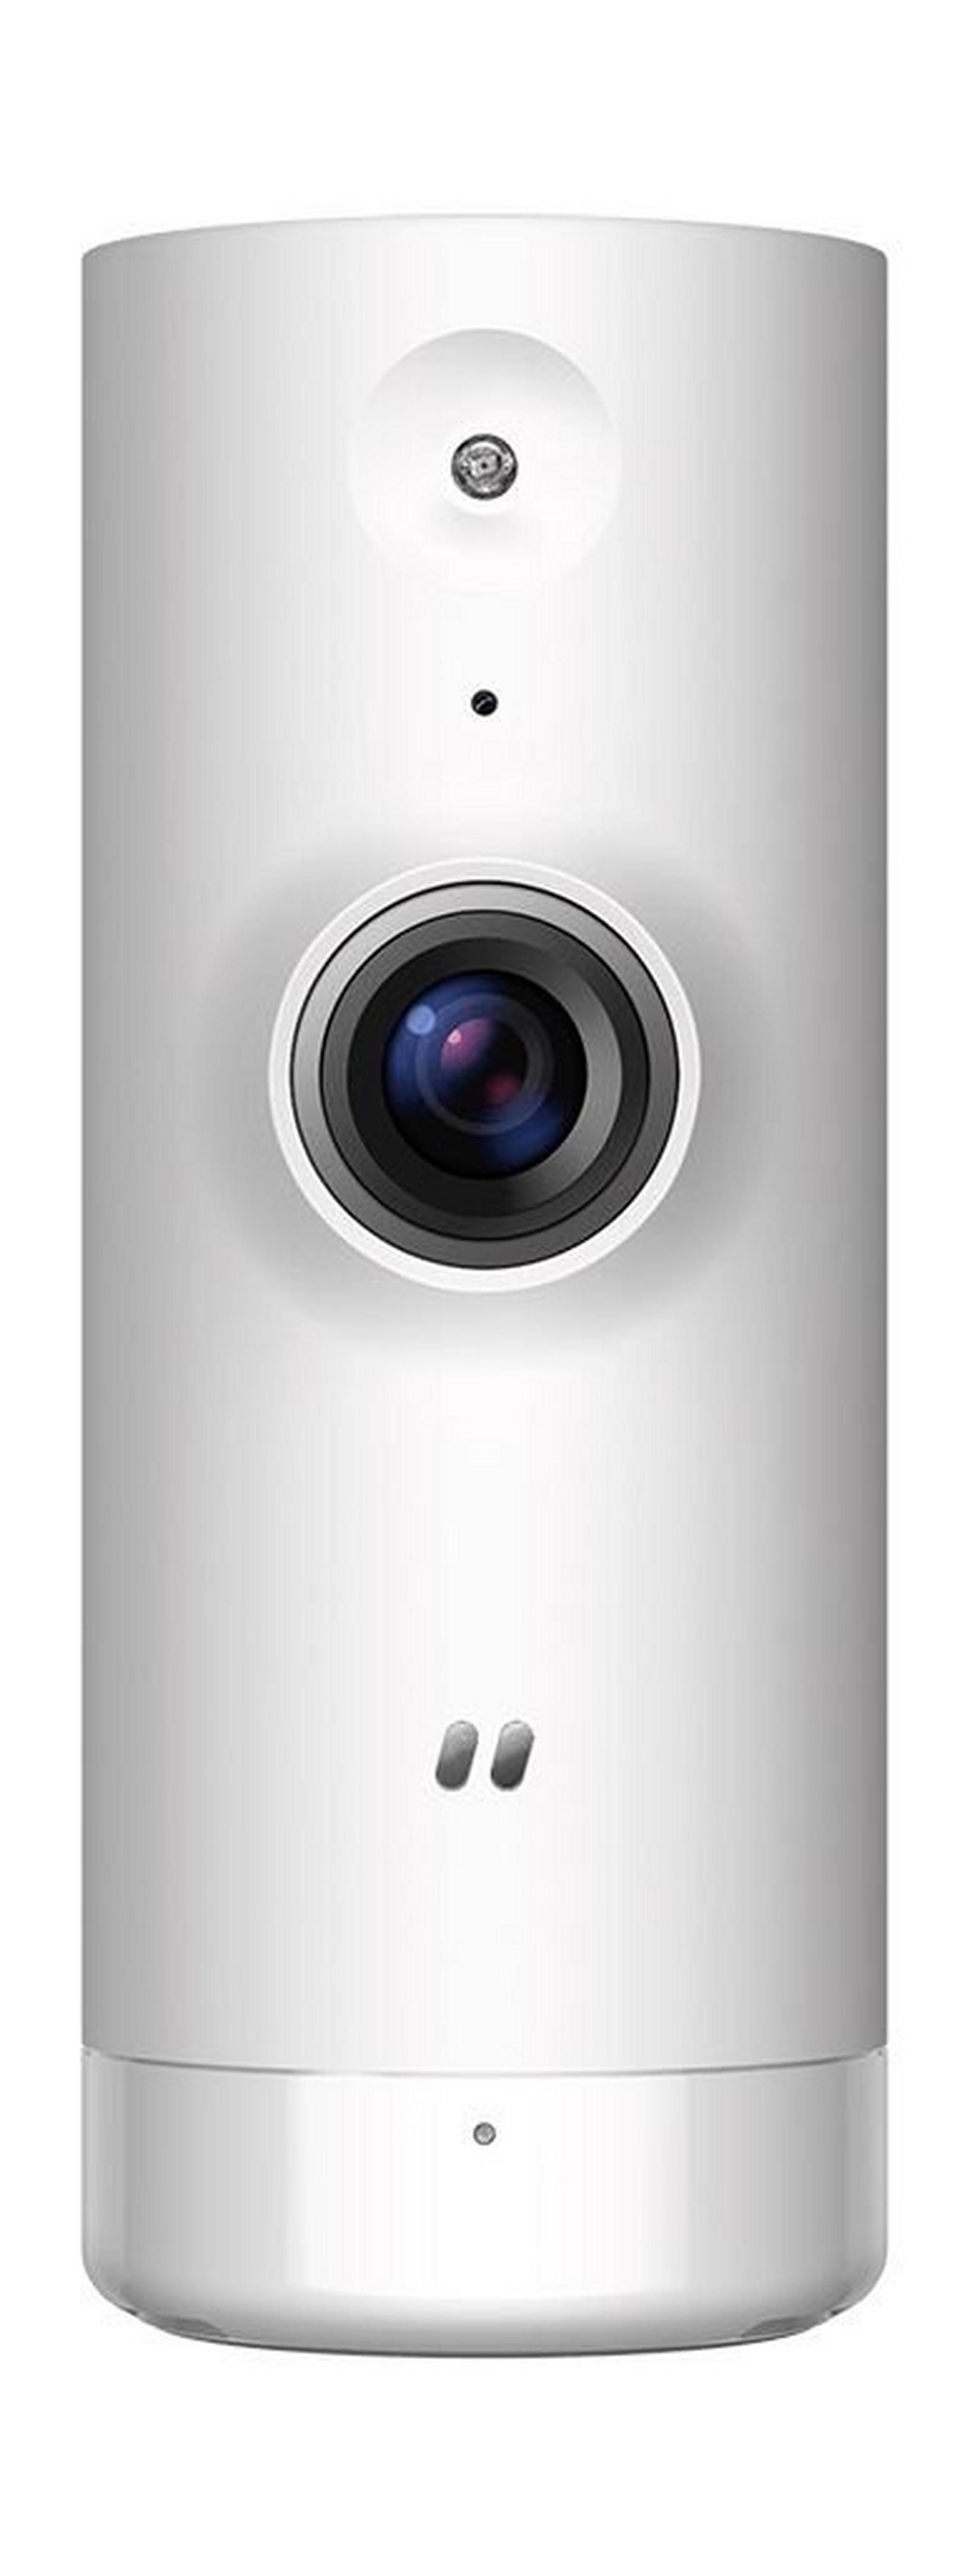 Dlink Mini HD WiFi Security Camera (DCS-8000LH)